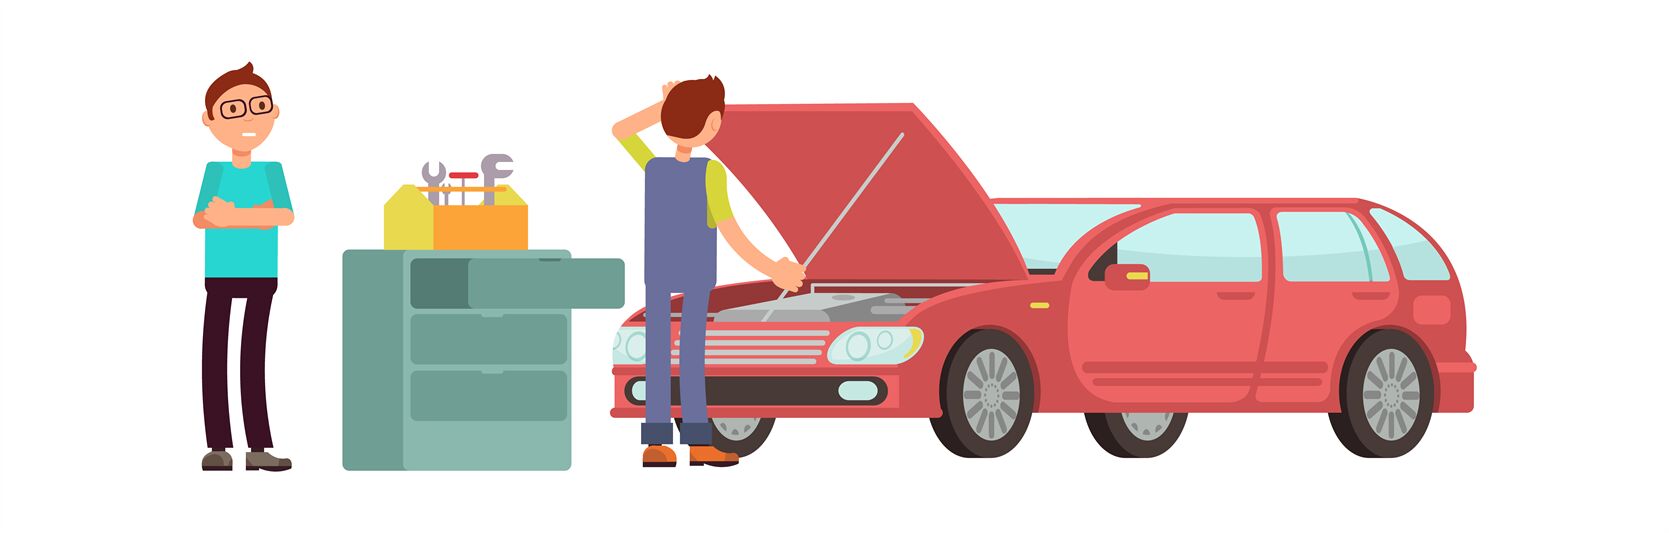 cartoon of mechanic fixing car